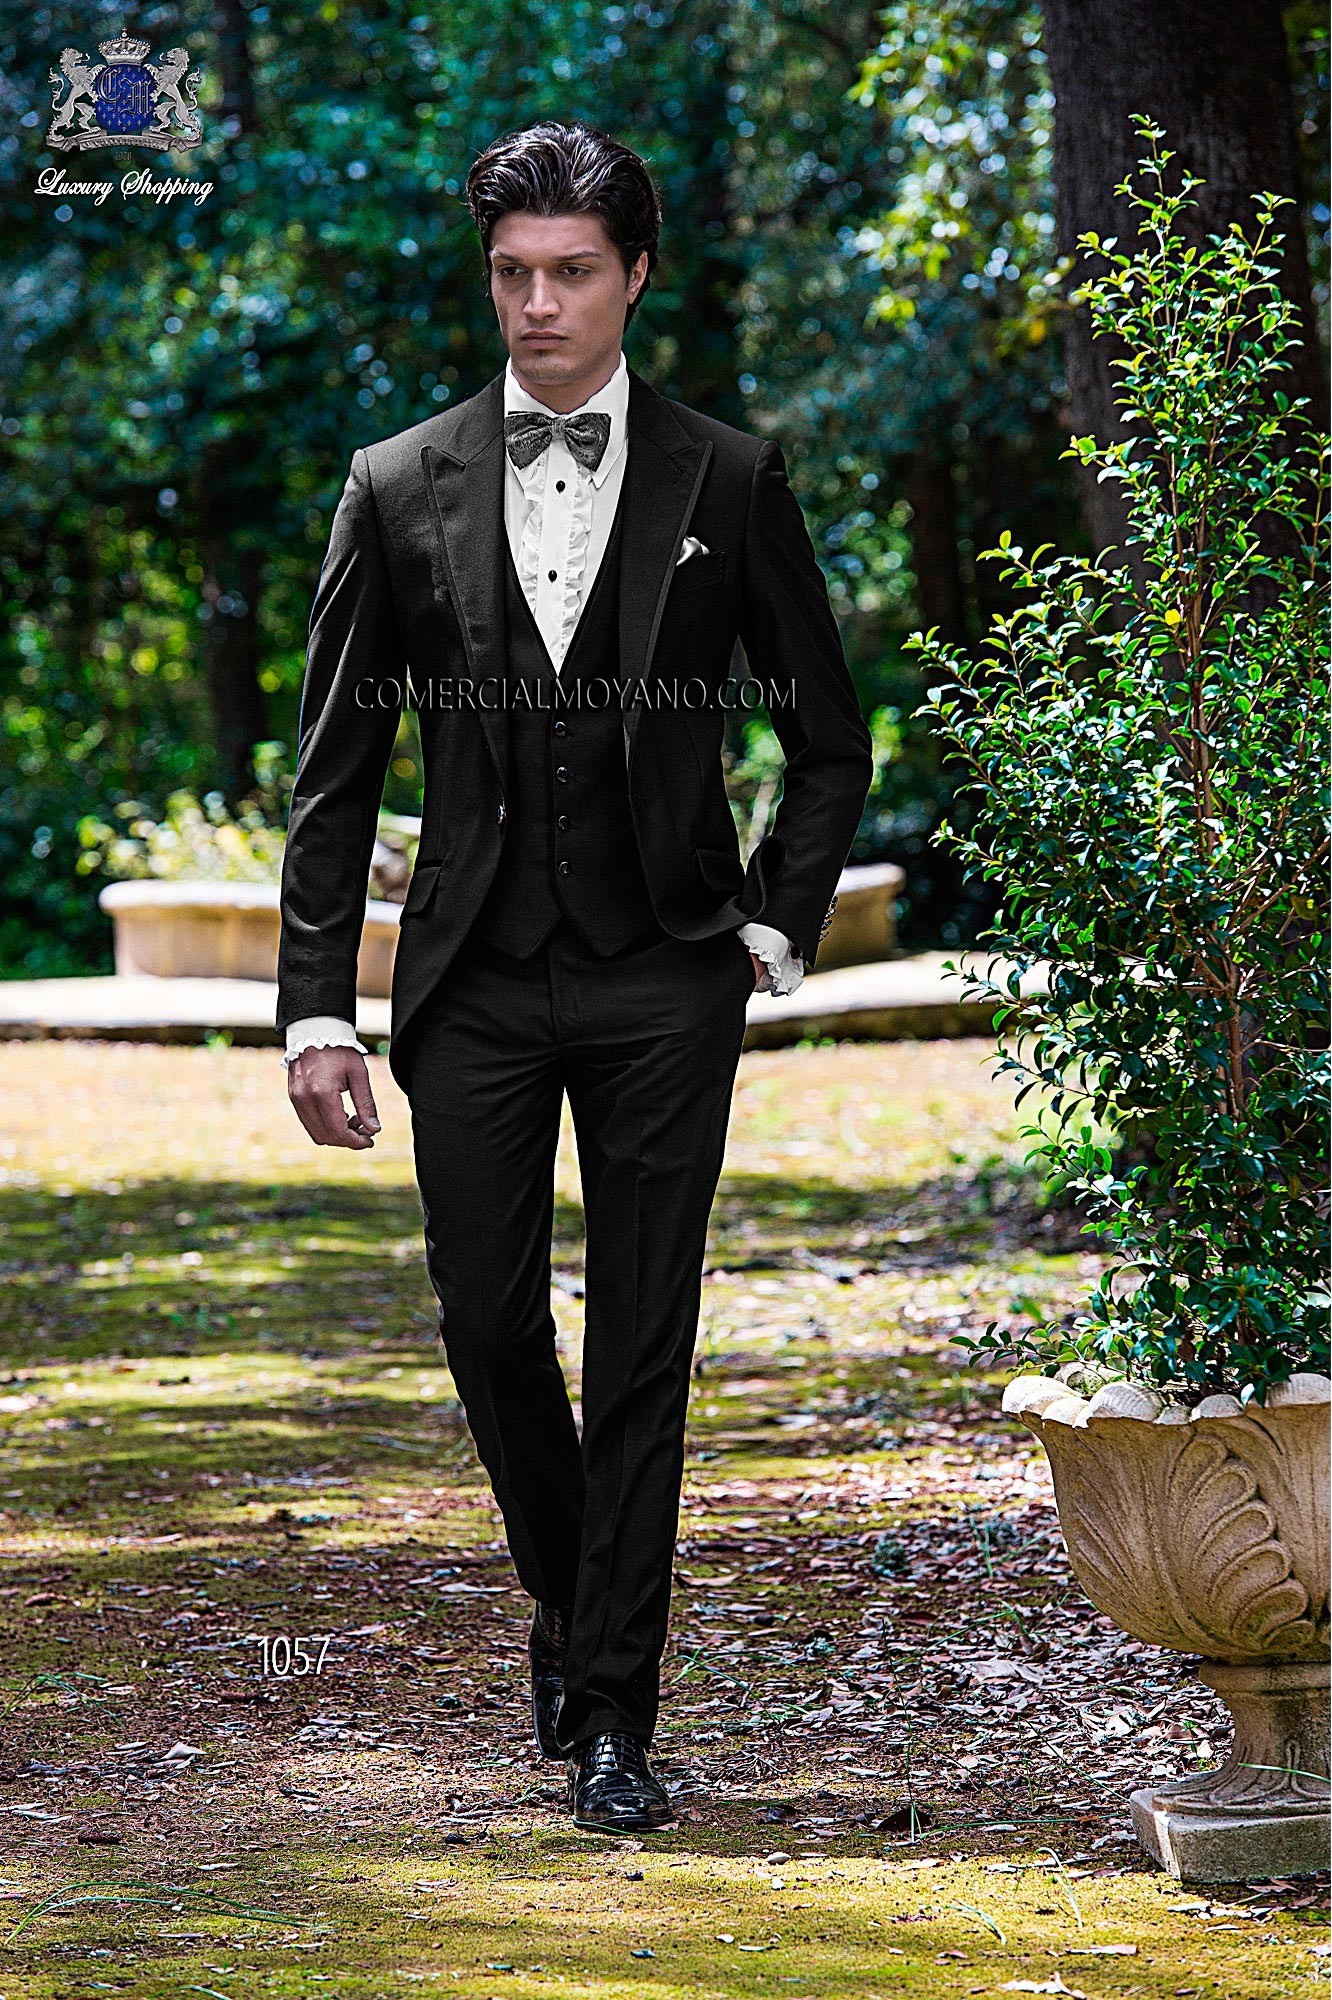 Fashion black men wedding suit model 1057 Mario Moyano